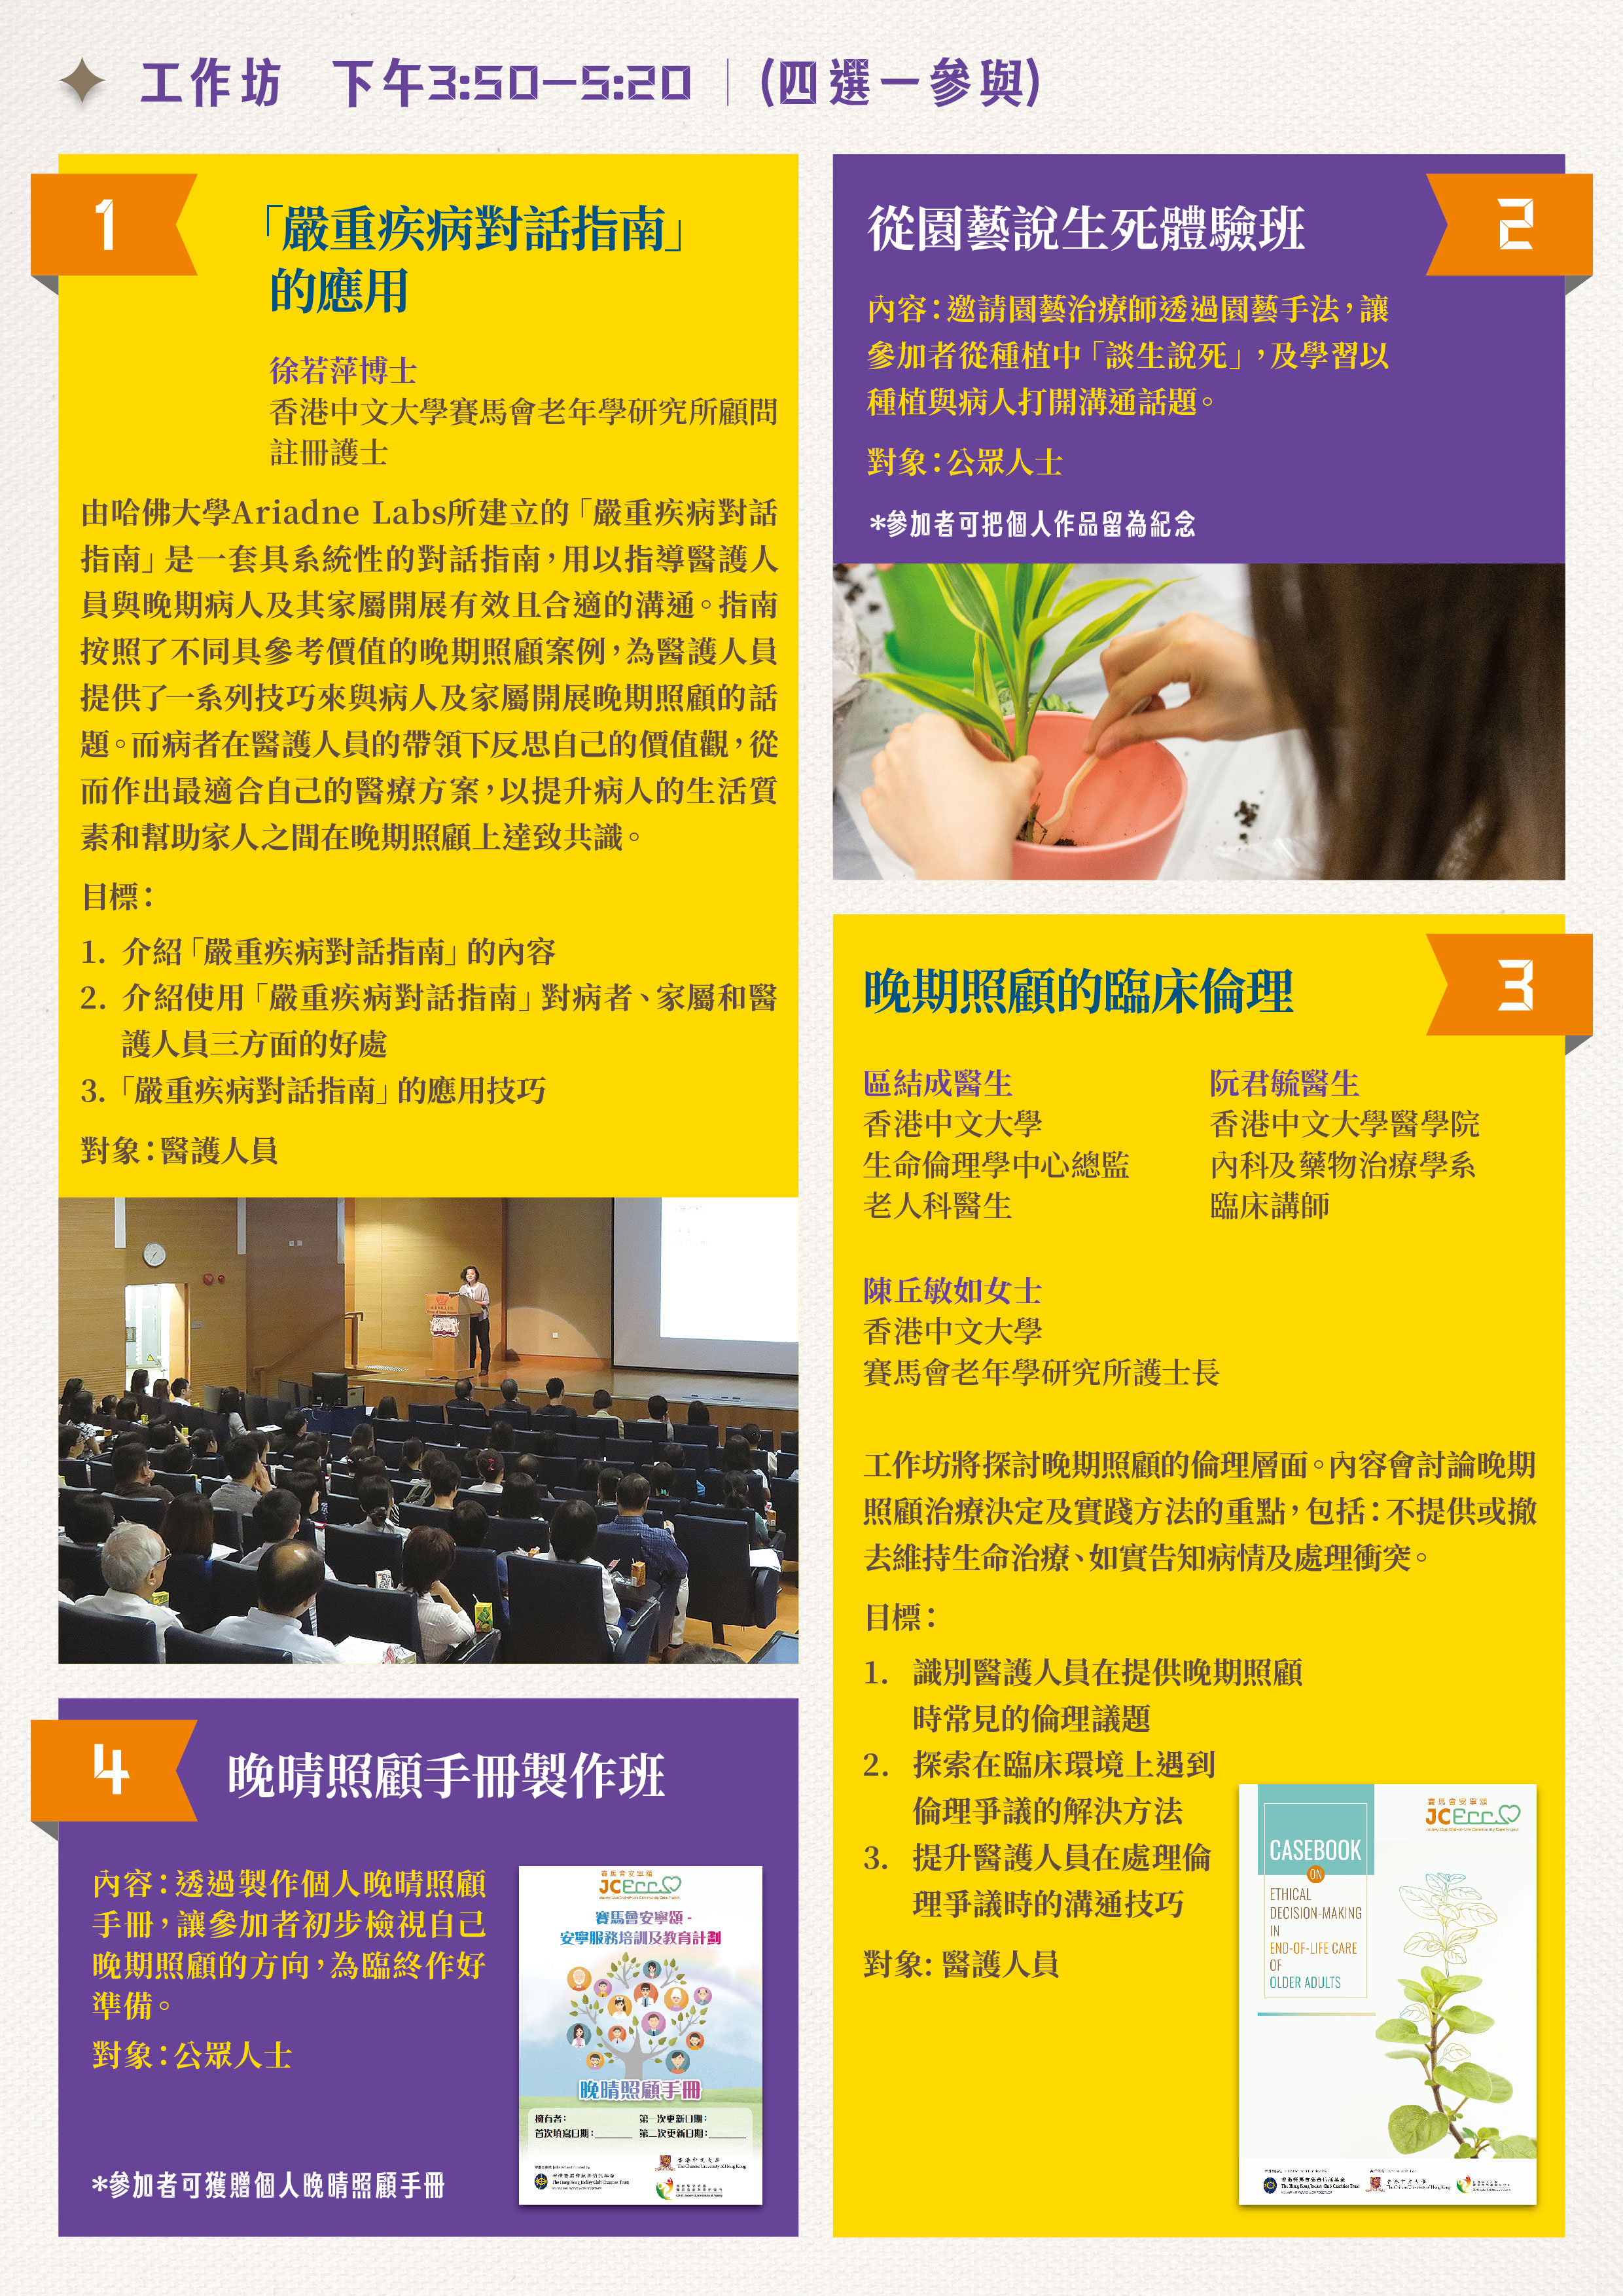 JCECC leaflet 0818 02